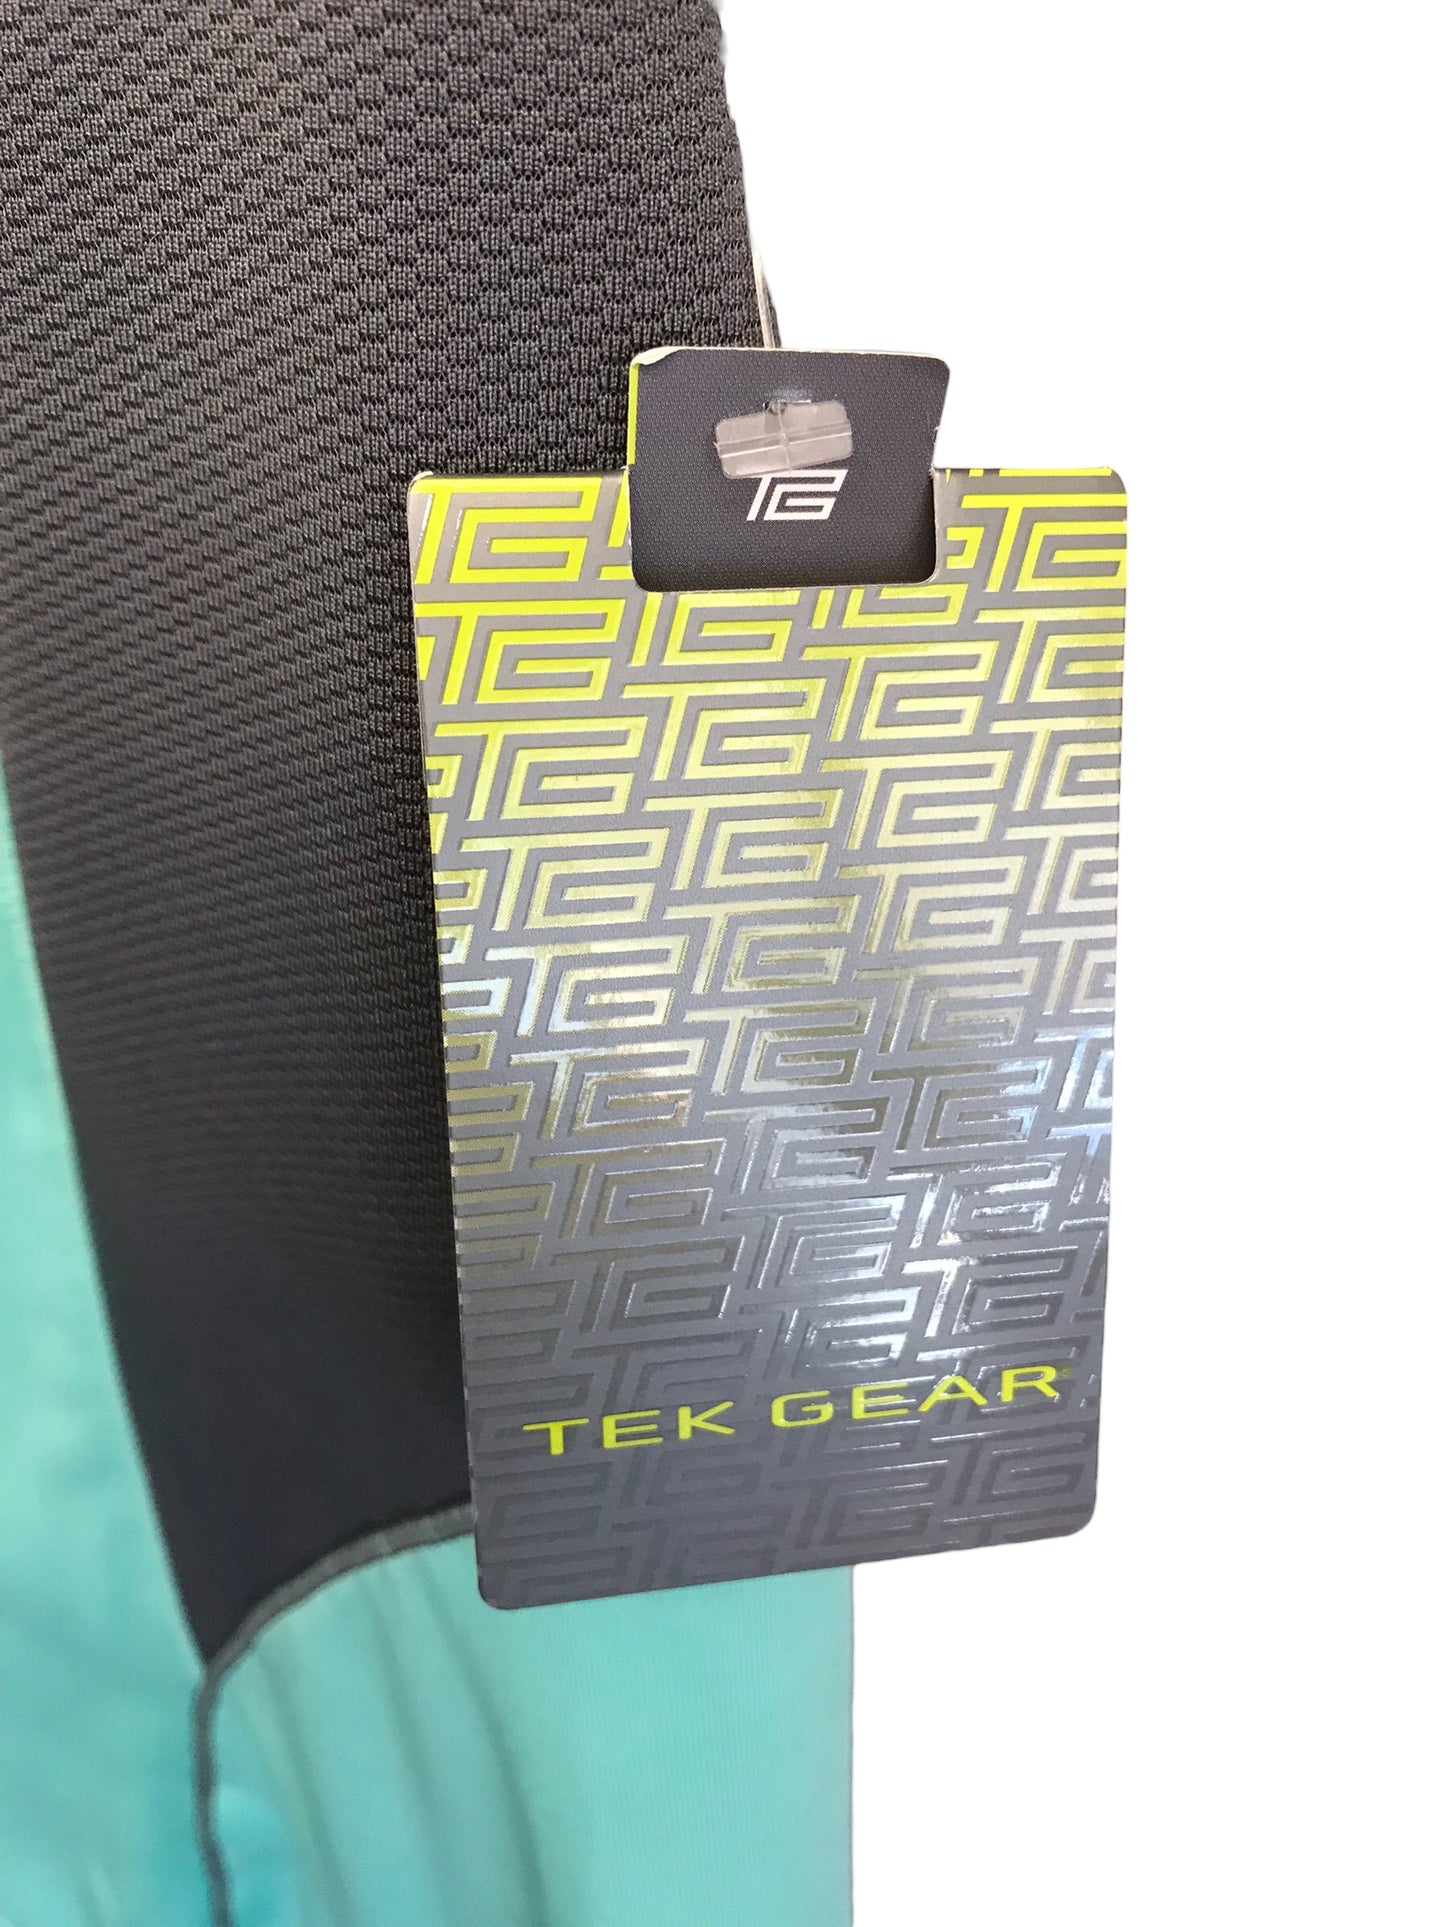 Green Athletic Top Short Sleeve By Tek Gear, Size: 1x